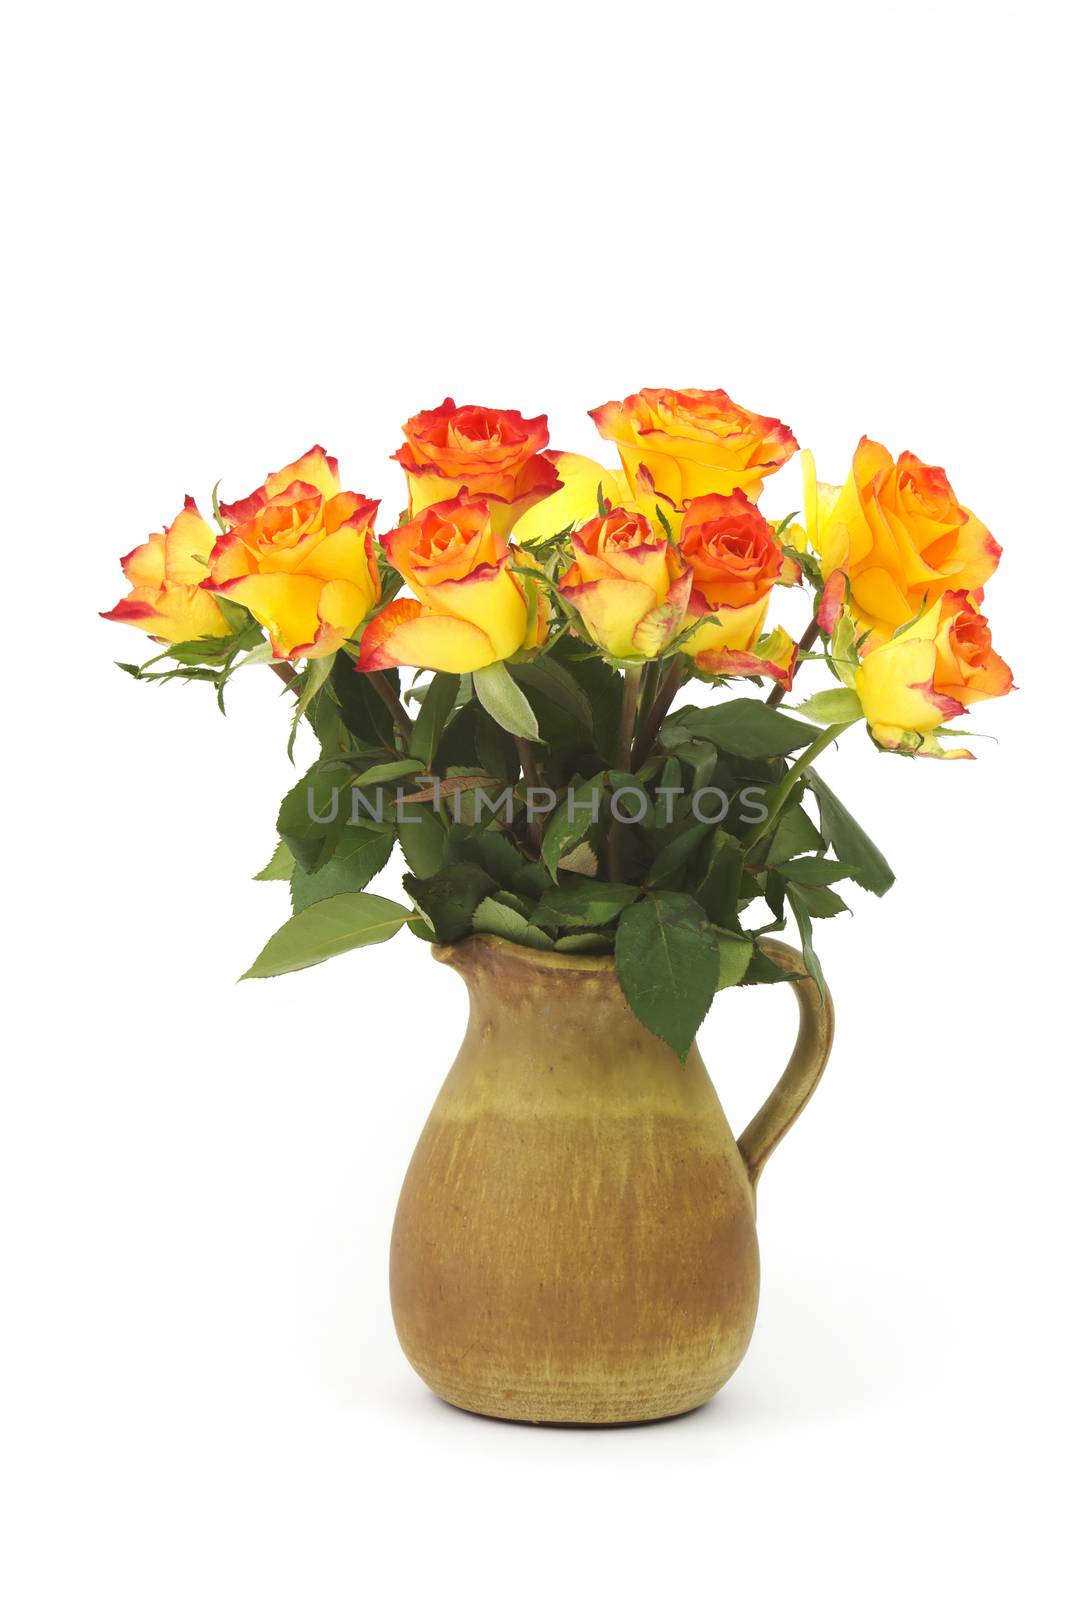 roses in a vase by miradrozdowski